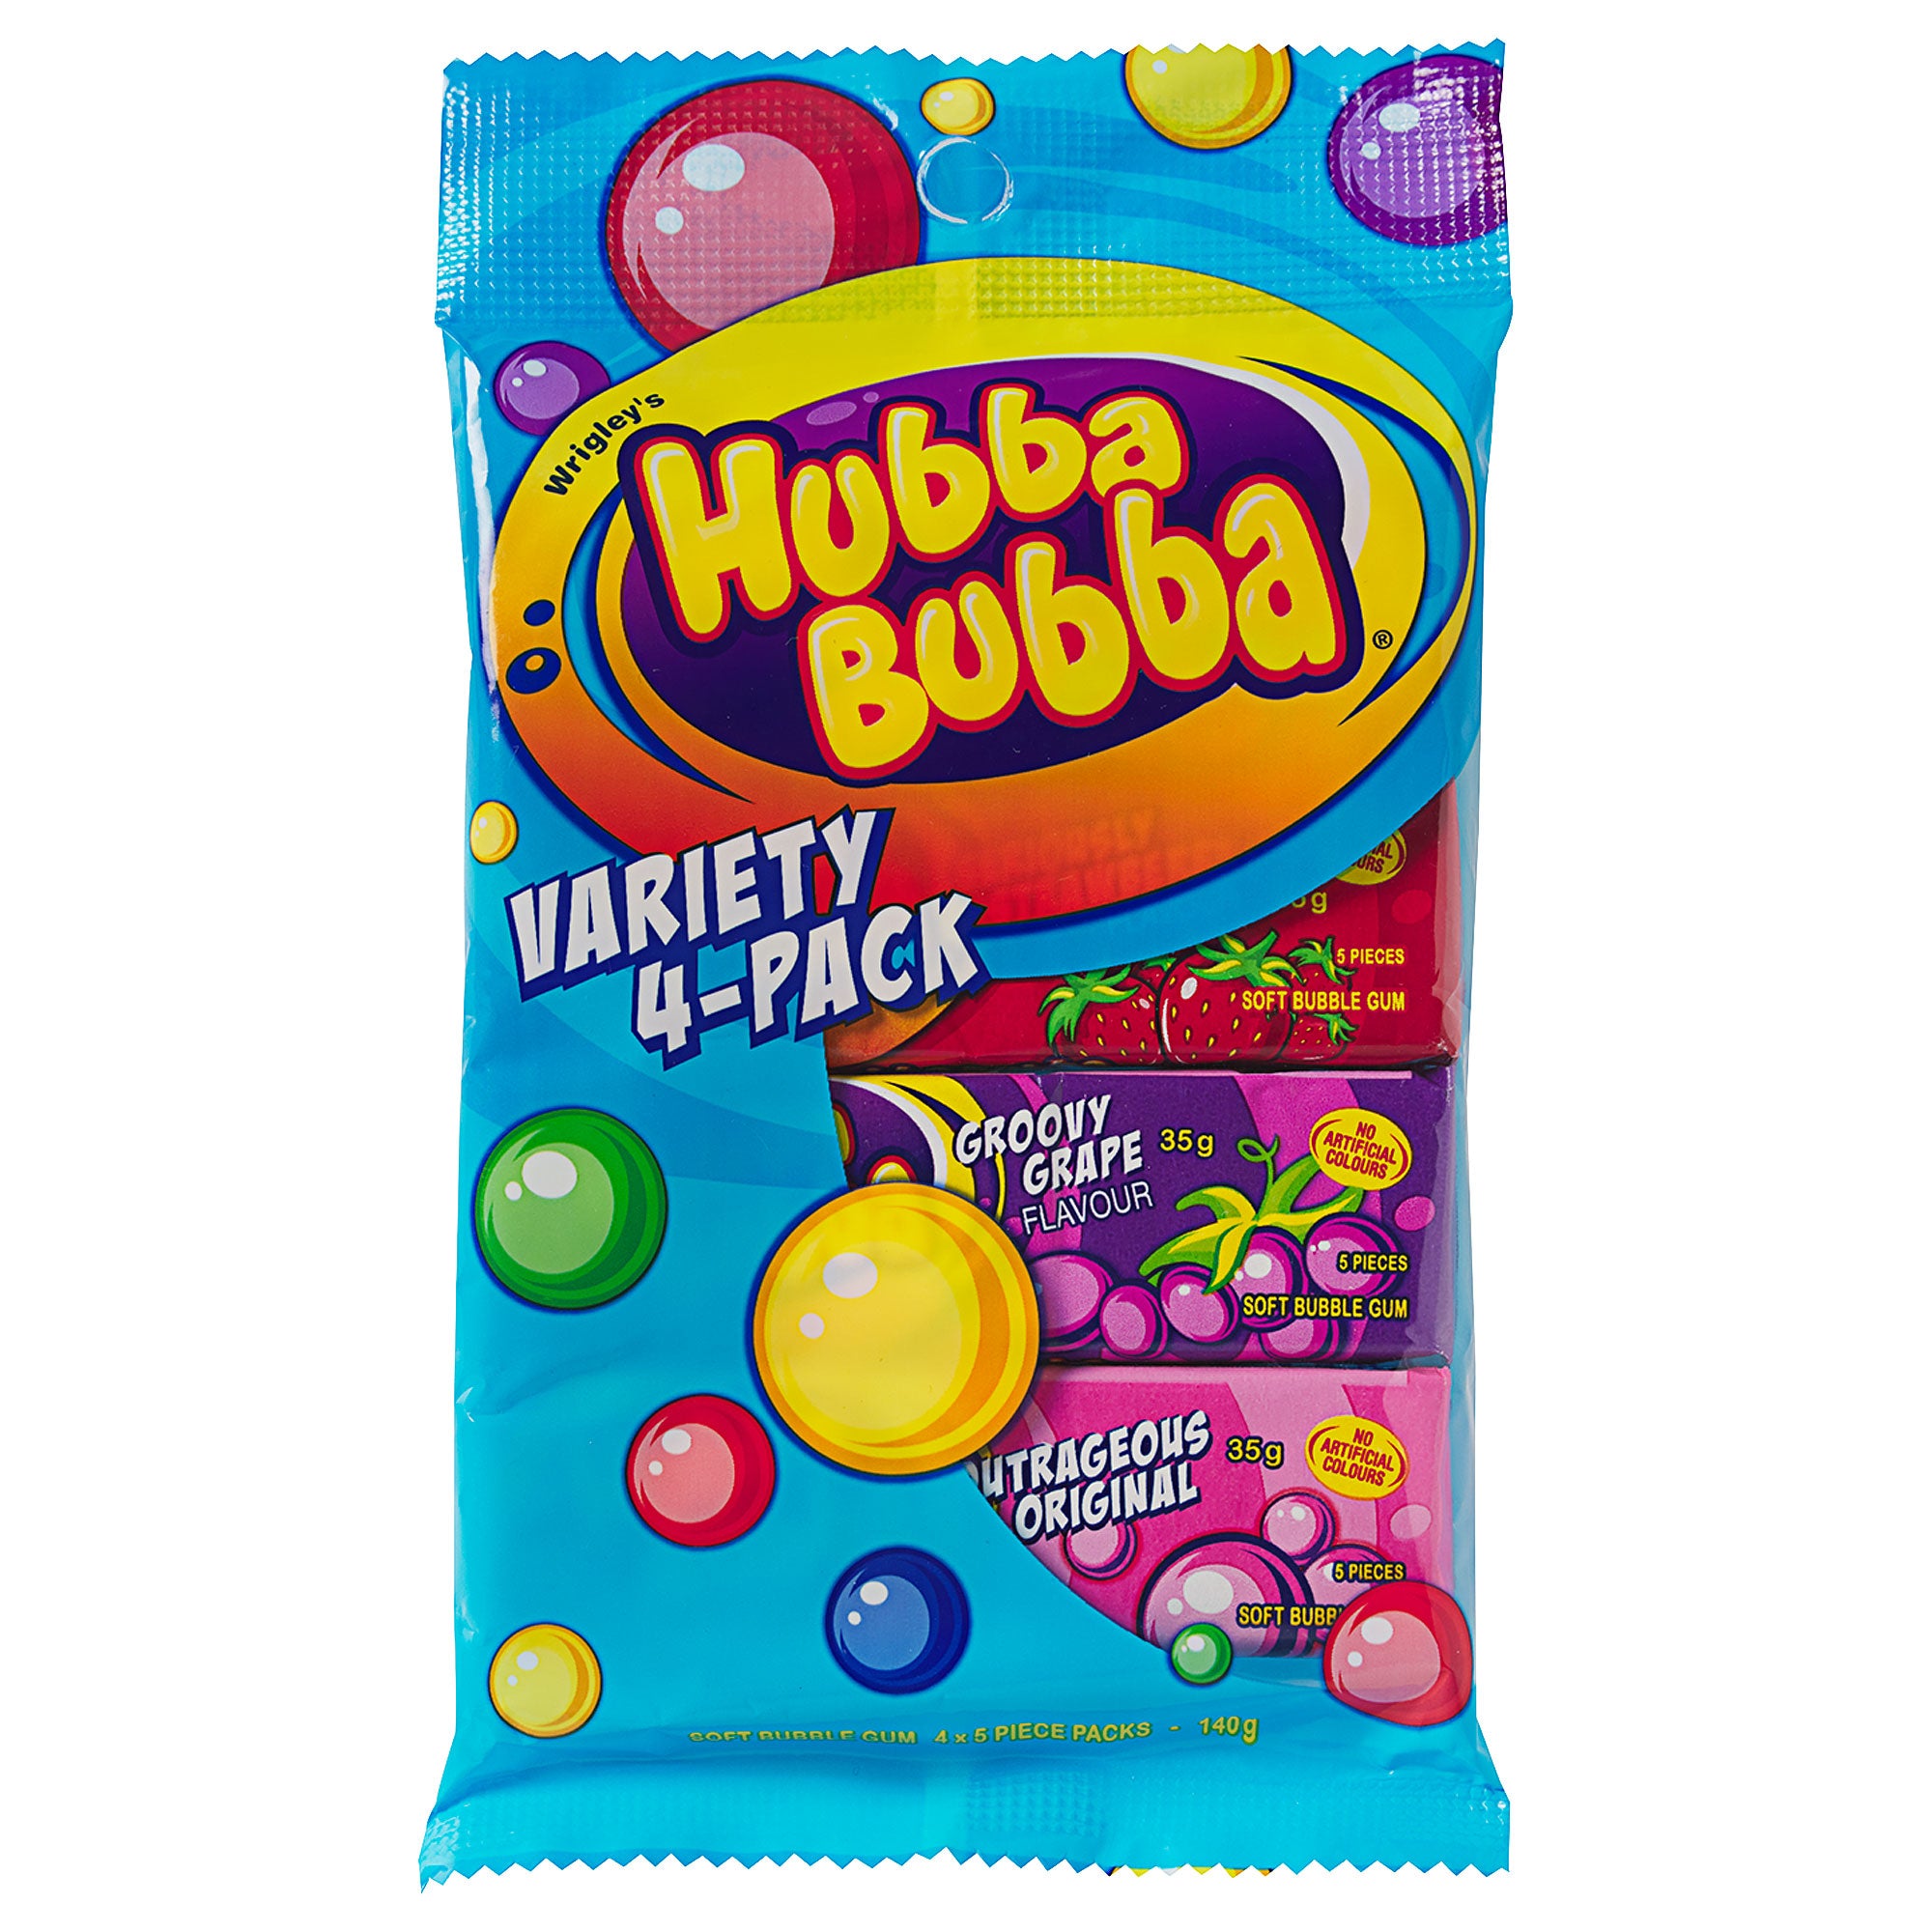 Hubba Bubba Variety Pack 6 Rolls of Original Tape 1 Pack of Original and 1  Pack of Blue Raspberry 